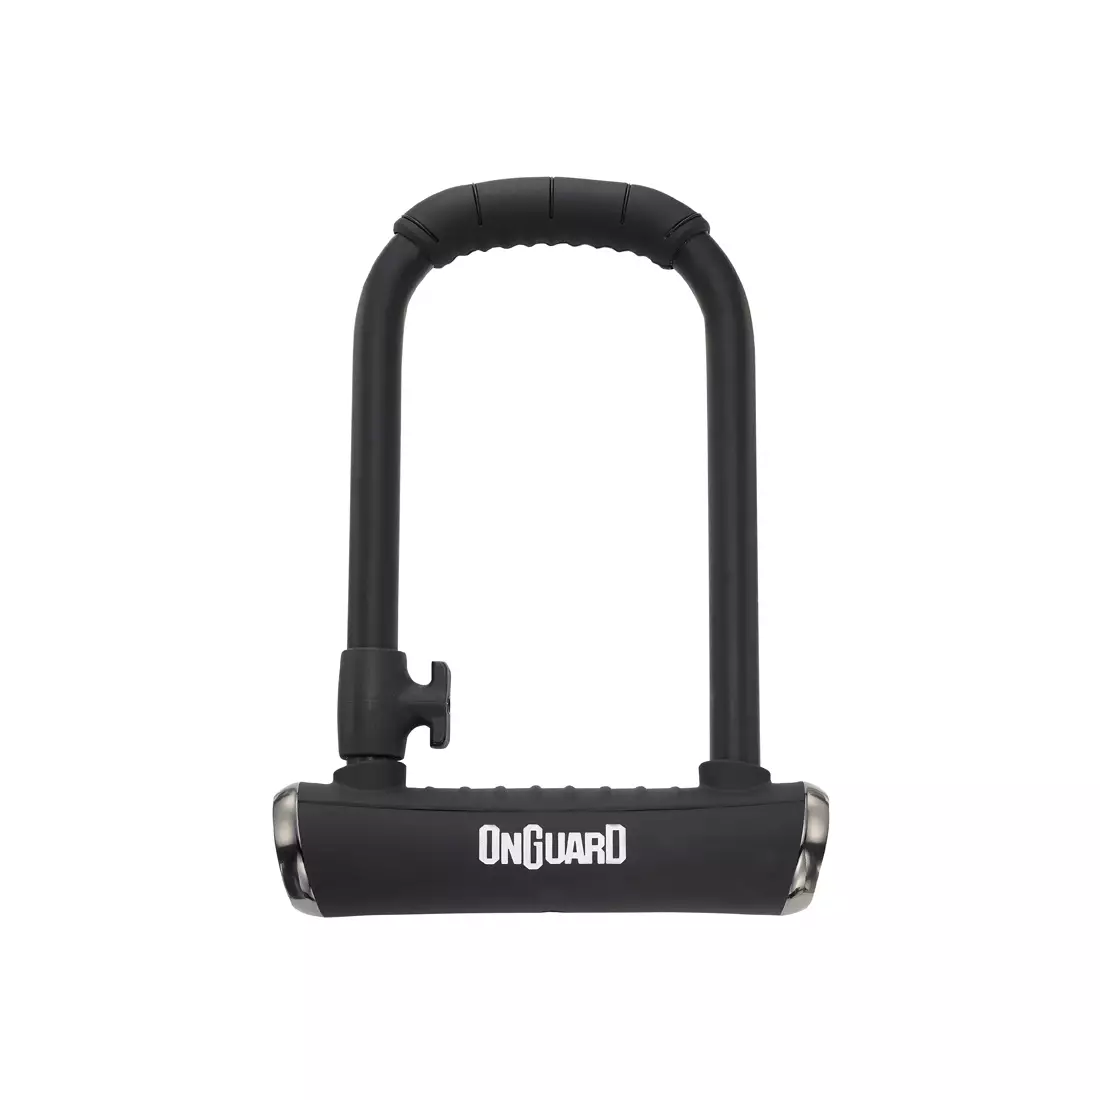 ONGUARD bicycle lock brute std x-series u-lock 16,8mm 115mm 202mm - 5 x keys with code ONG-8001X